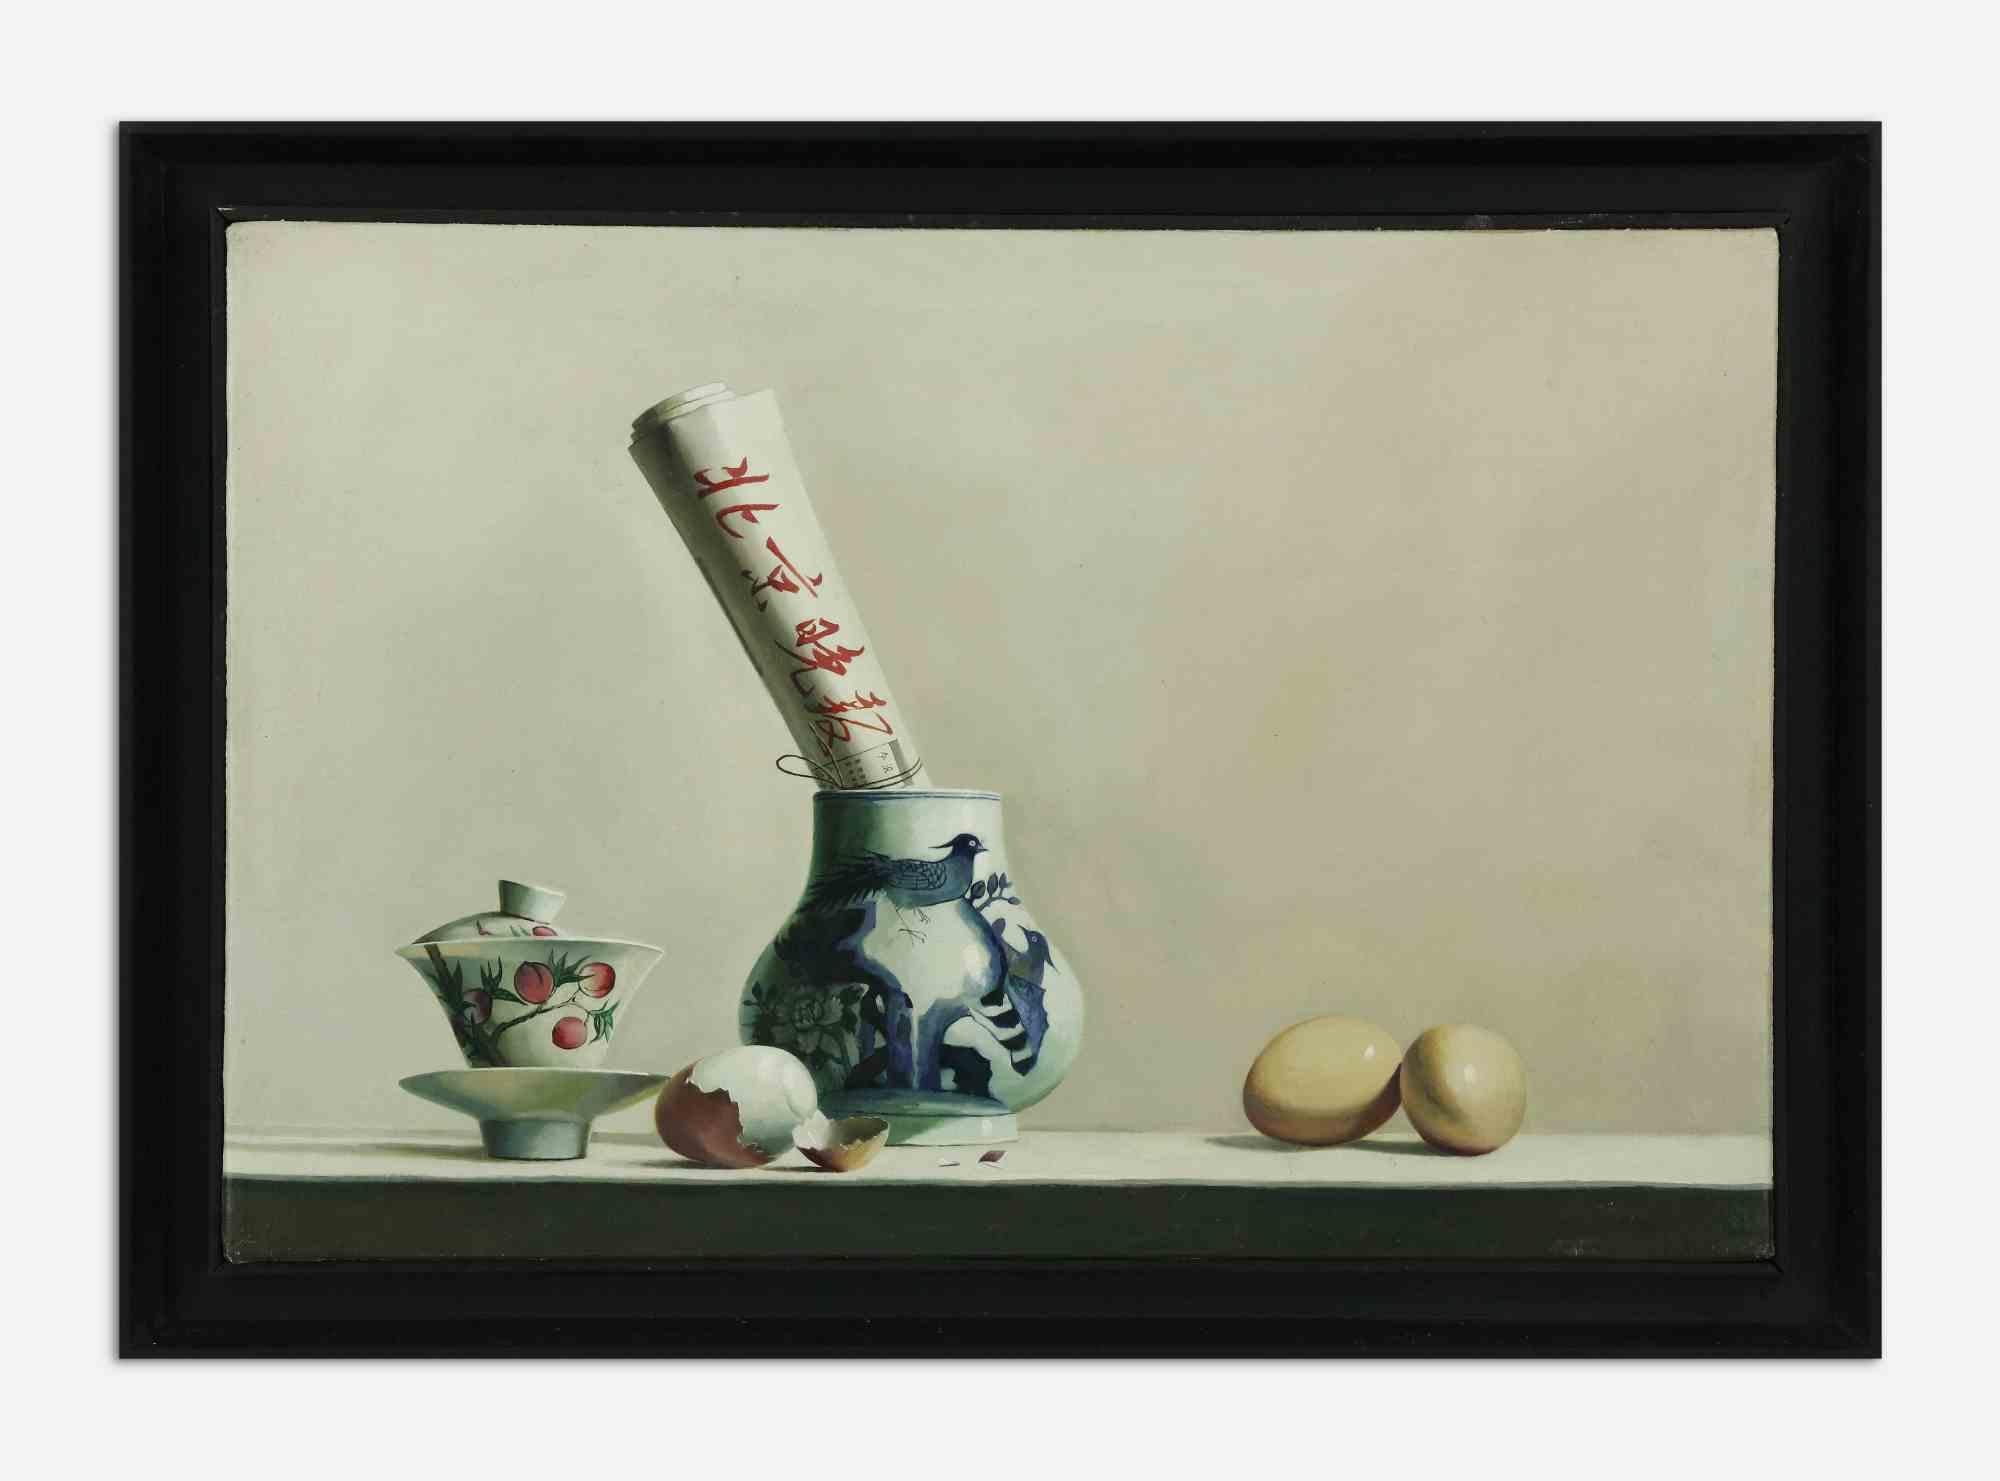 Frühstück -  Ölgemälde von Zhang Wei Guang - 2007